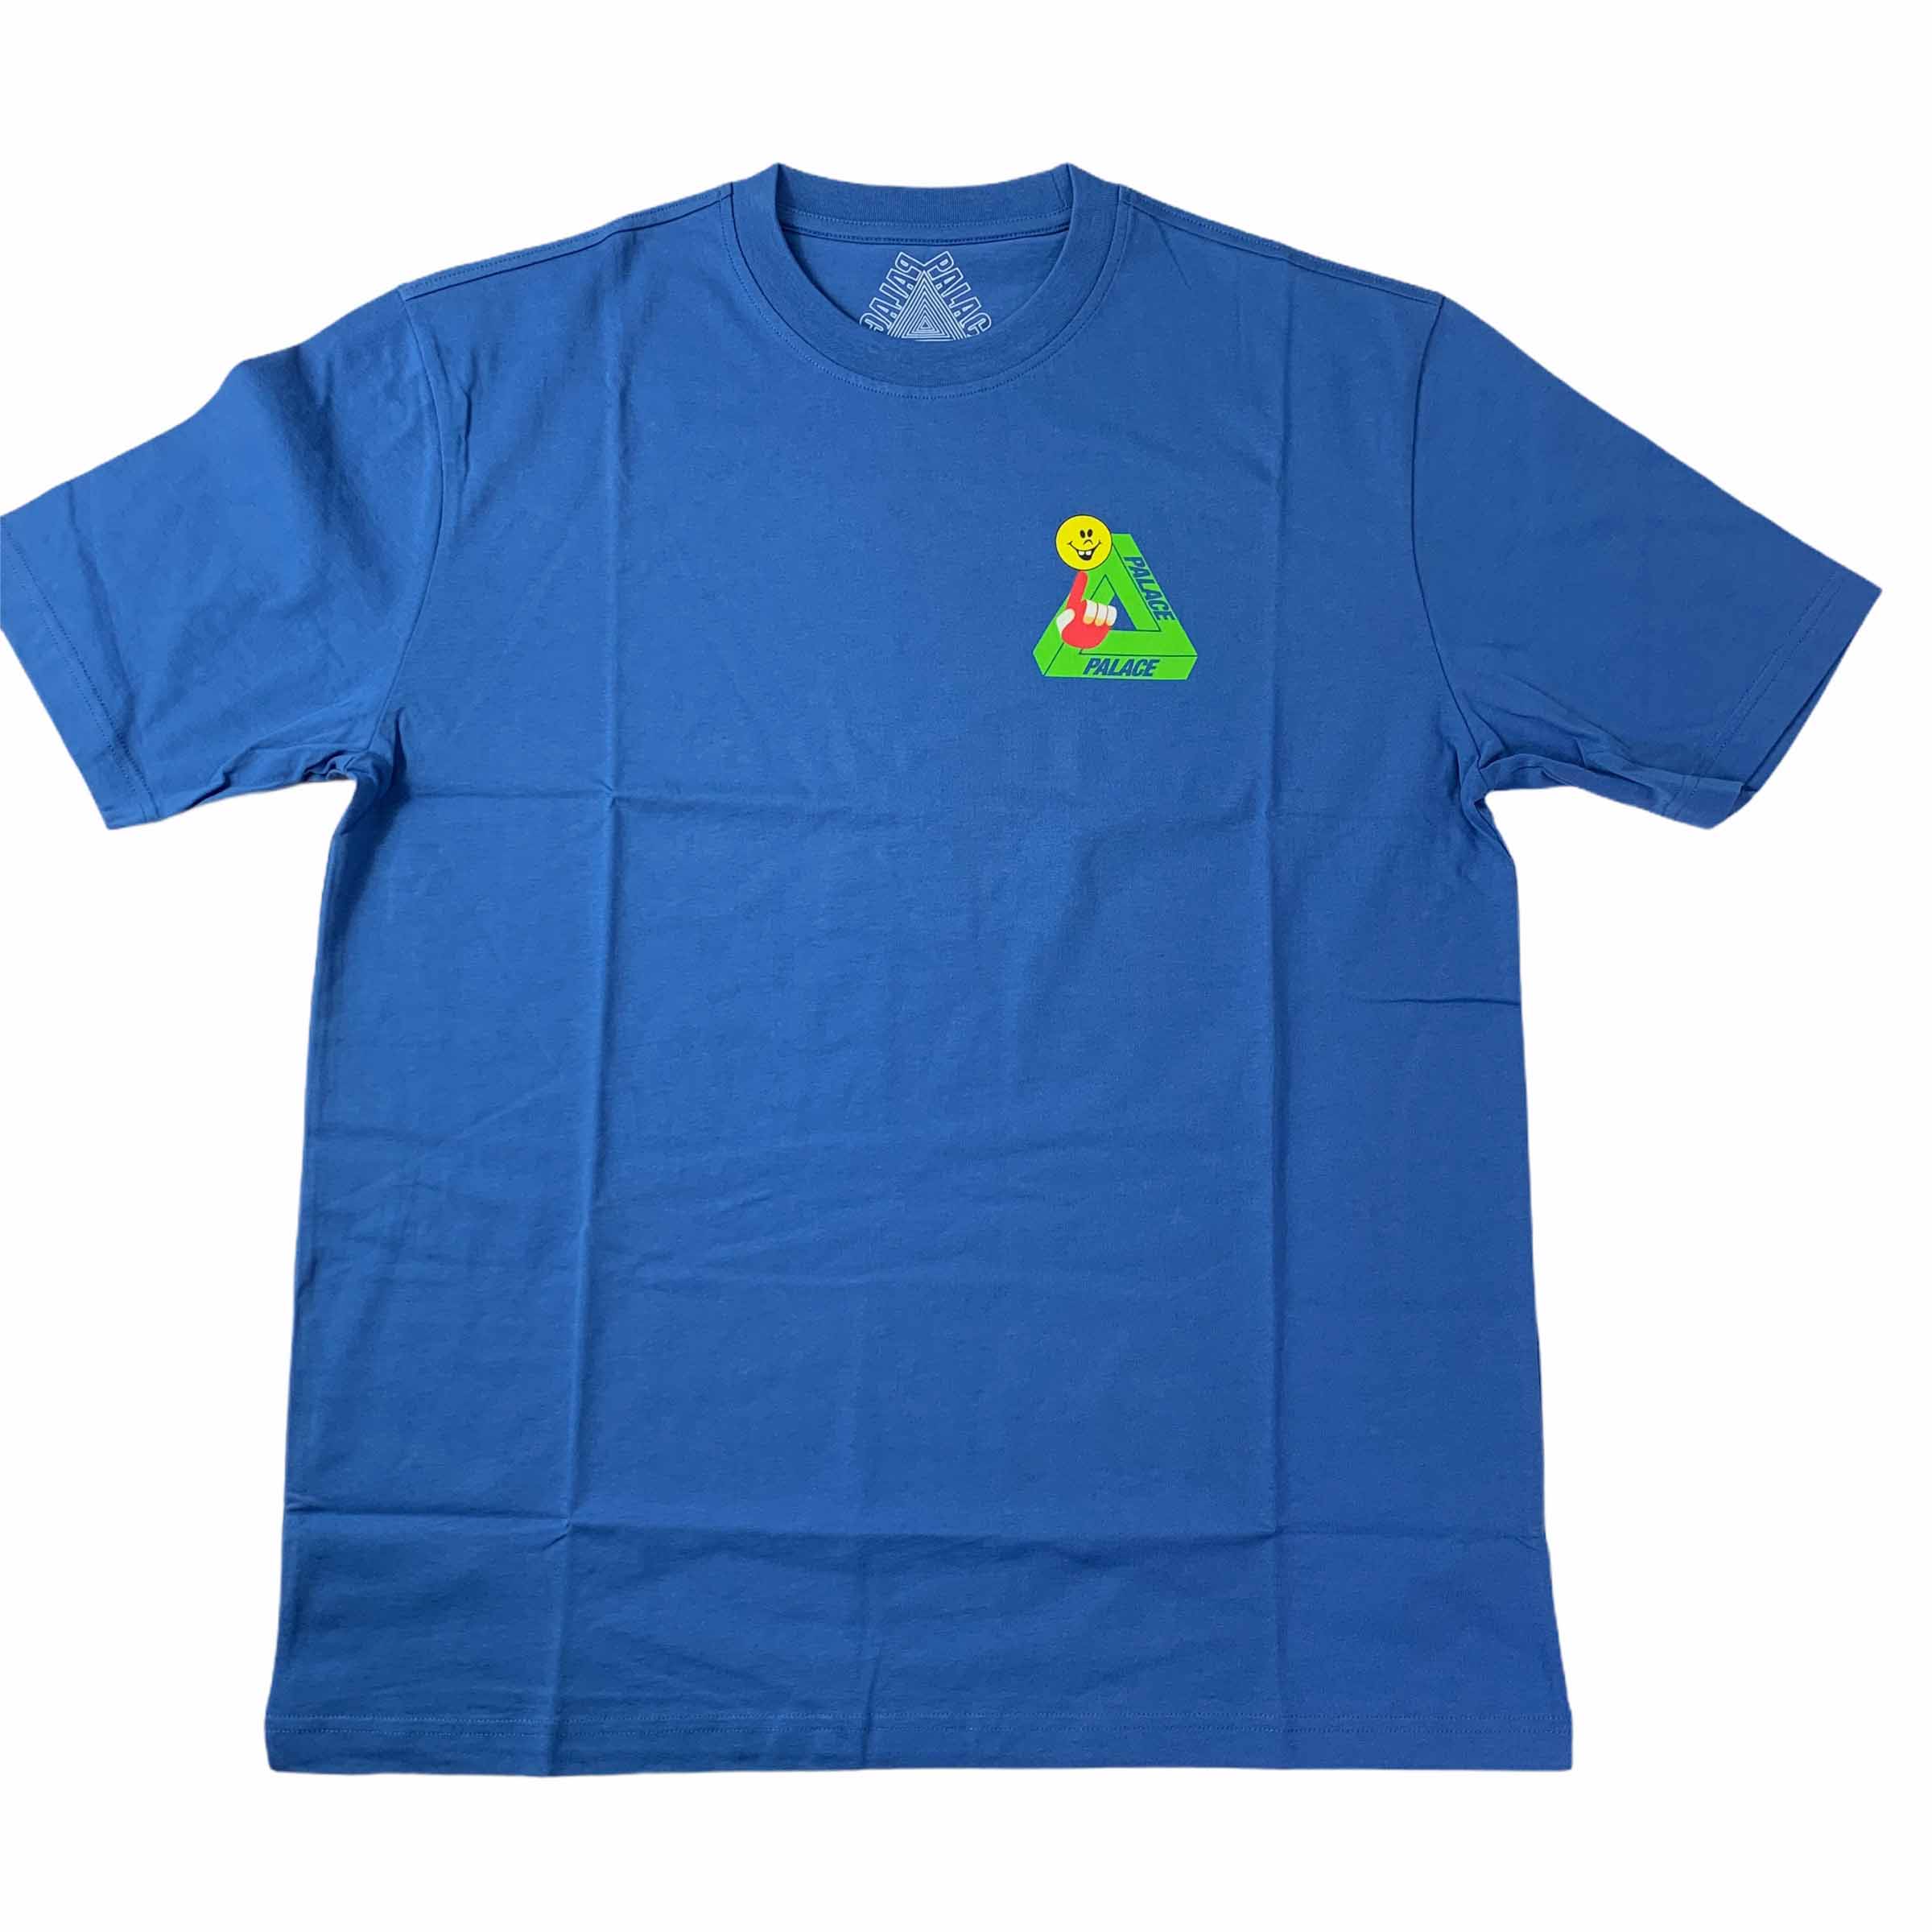 [Palace] Tri-Smiler T-Shirt Blue - Size XL